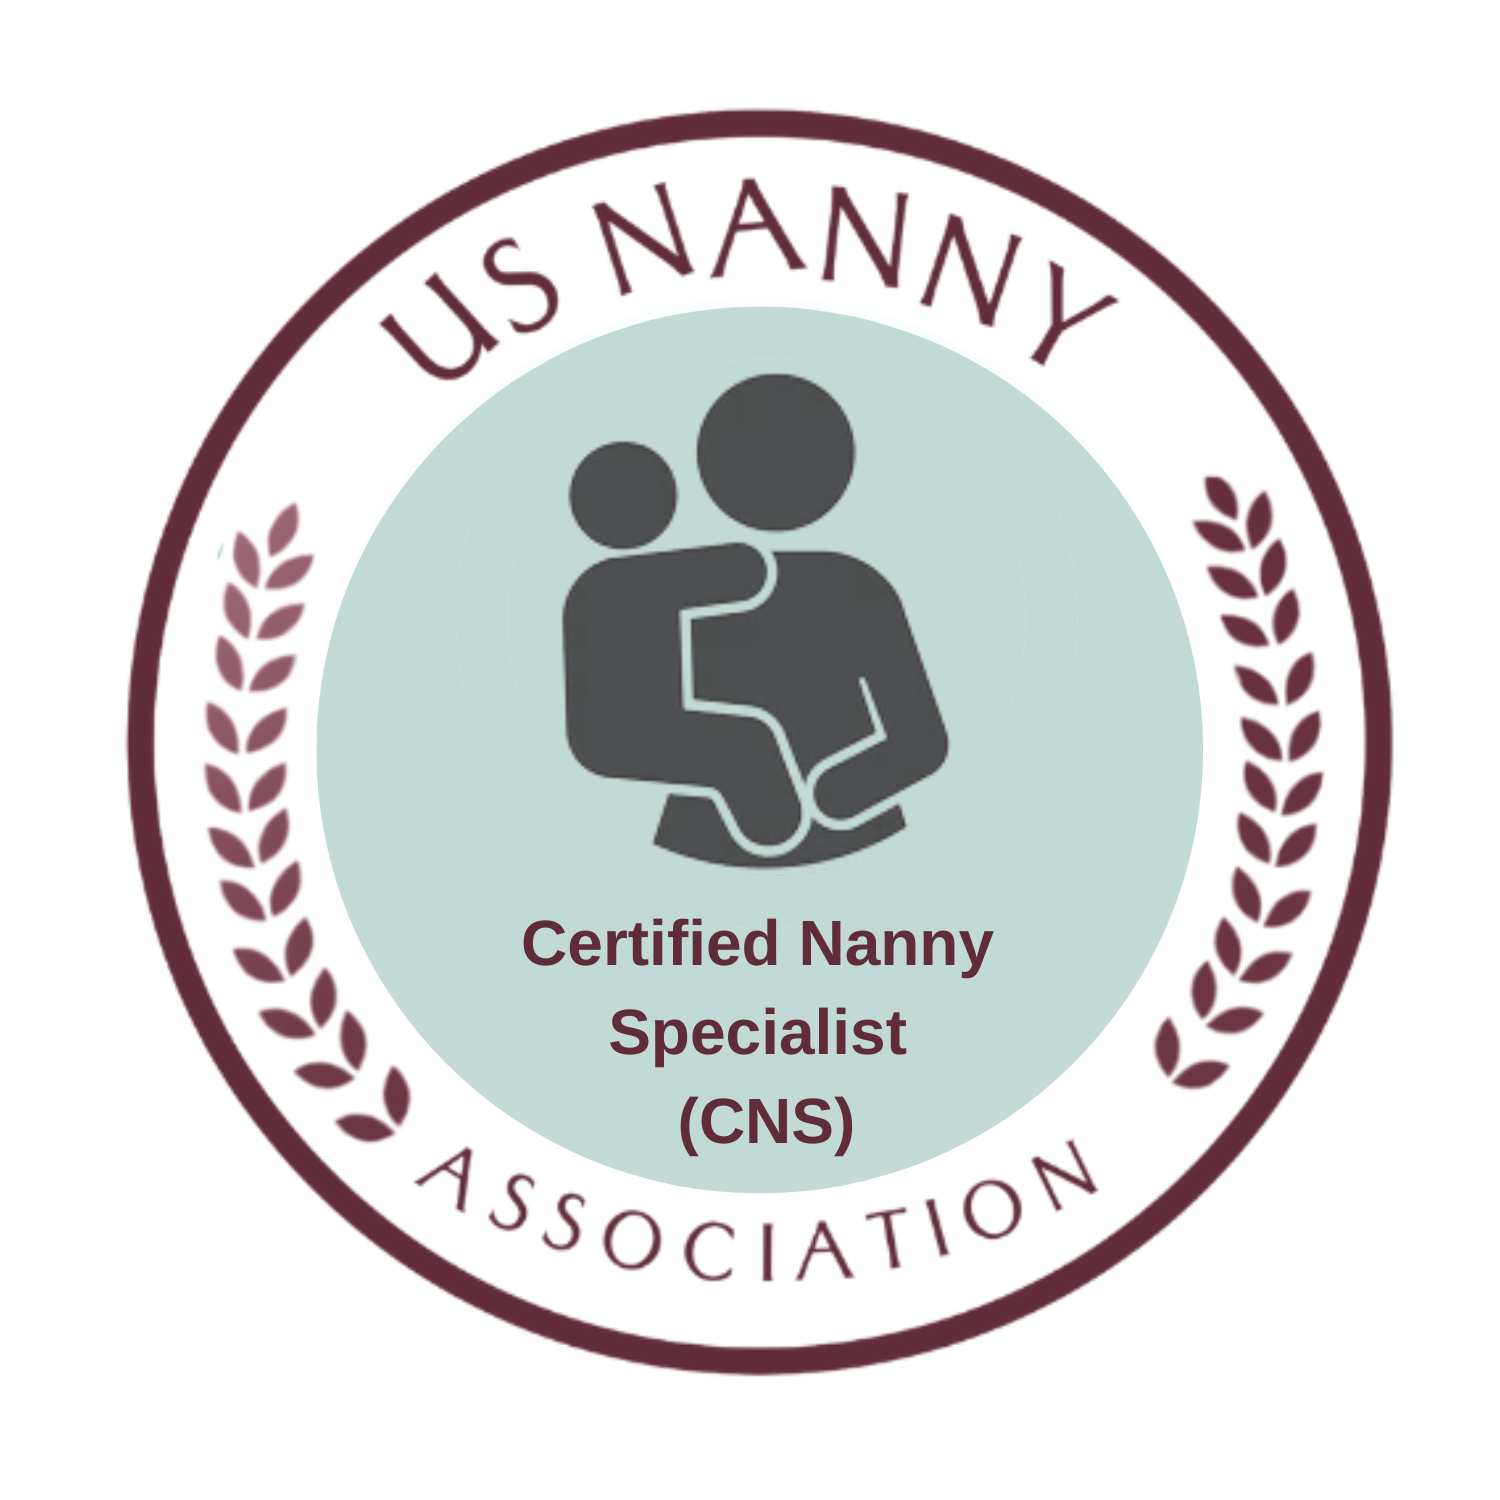 Nanny Specialist logo with CNS